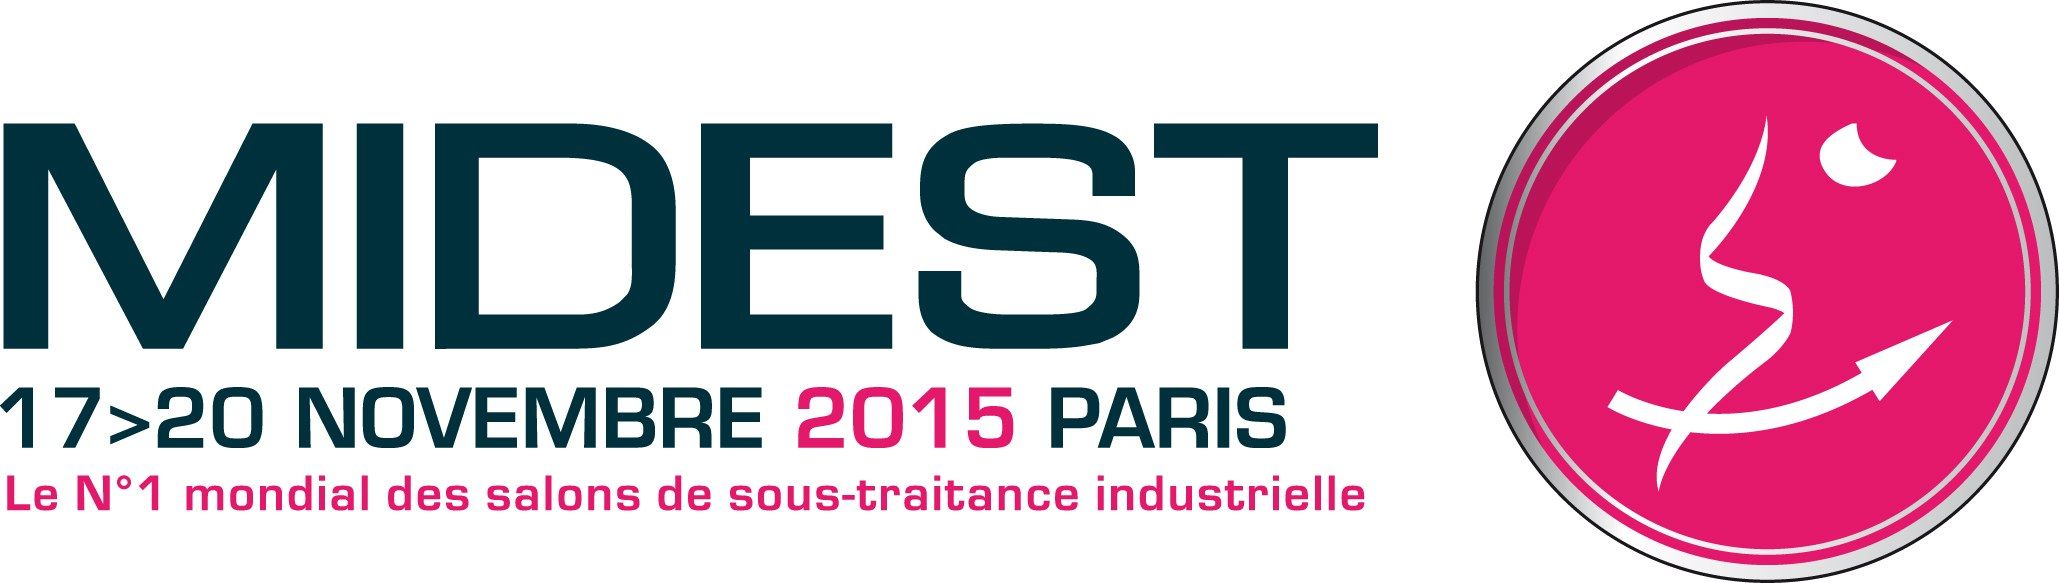 DANOBATGROUP´s precision machining business unit to exhibit at MIDEST 2015 in Paris between 12 - 20 November